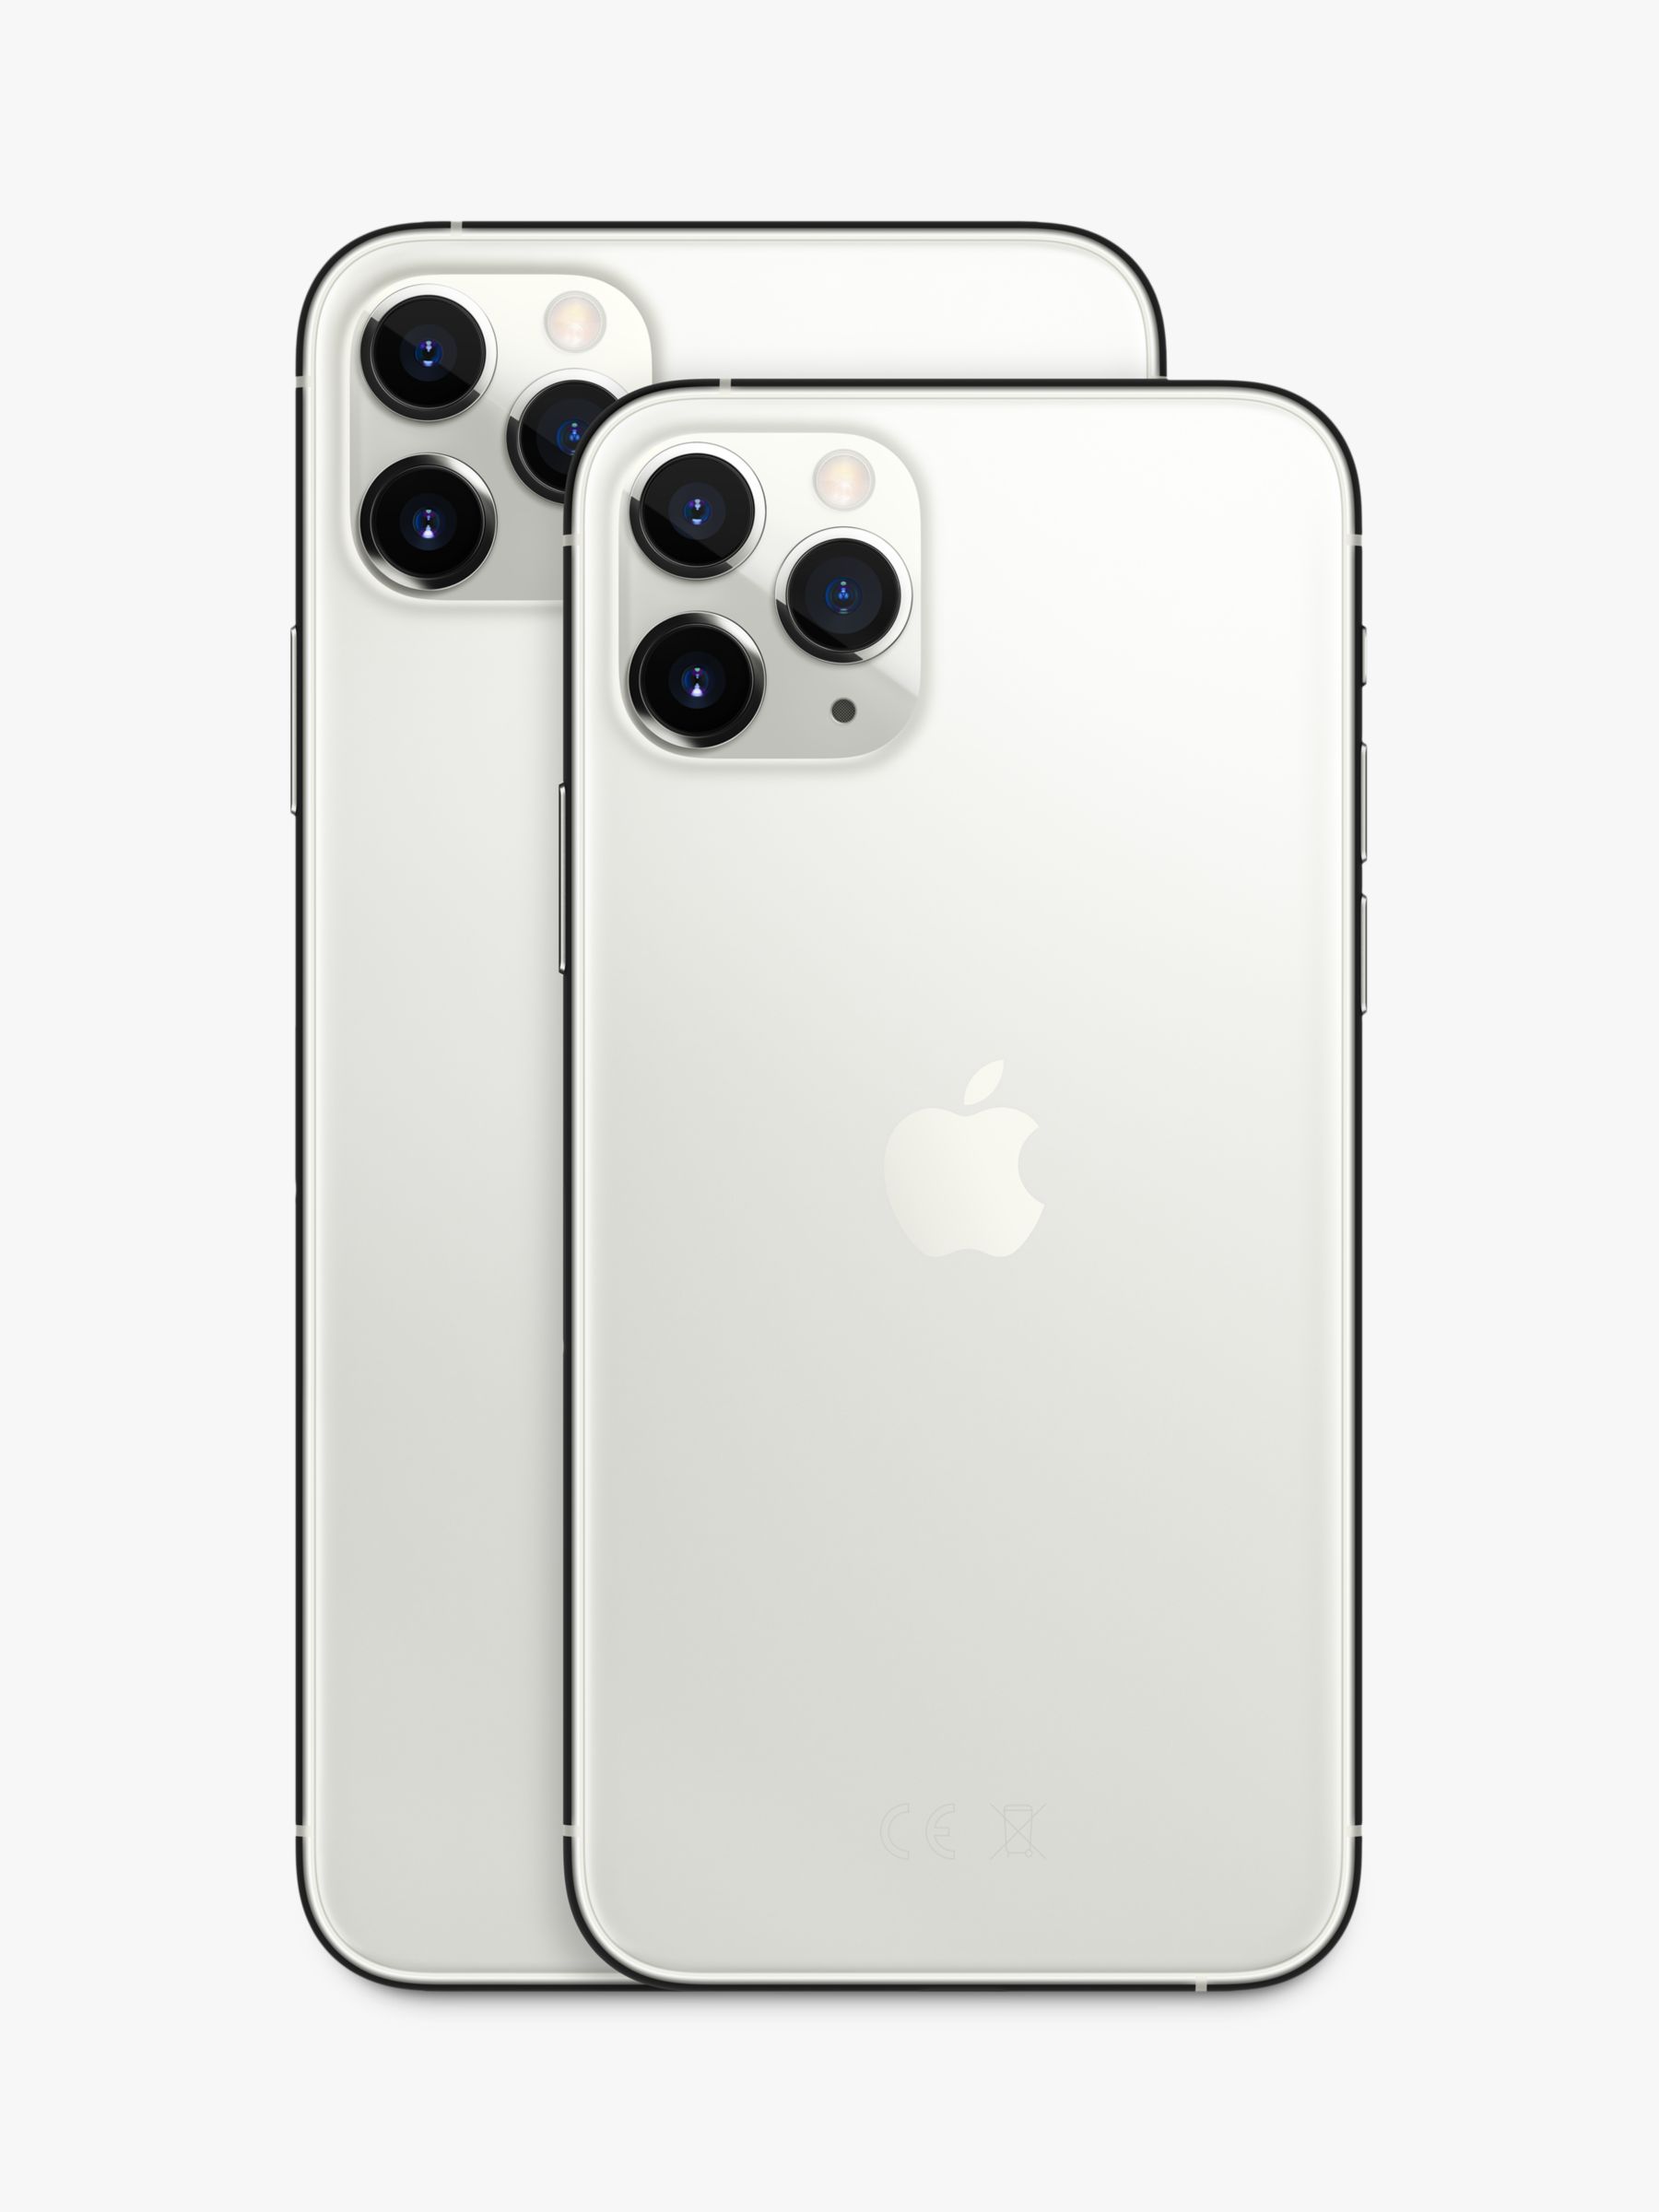 Apple Iphone 11 Pro Max Ios 6 5 4g Lte Sim Free 64gb At John